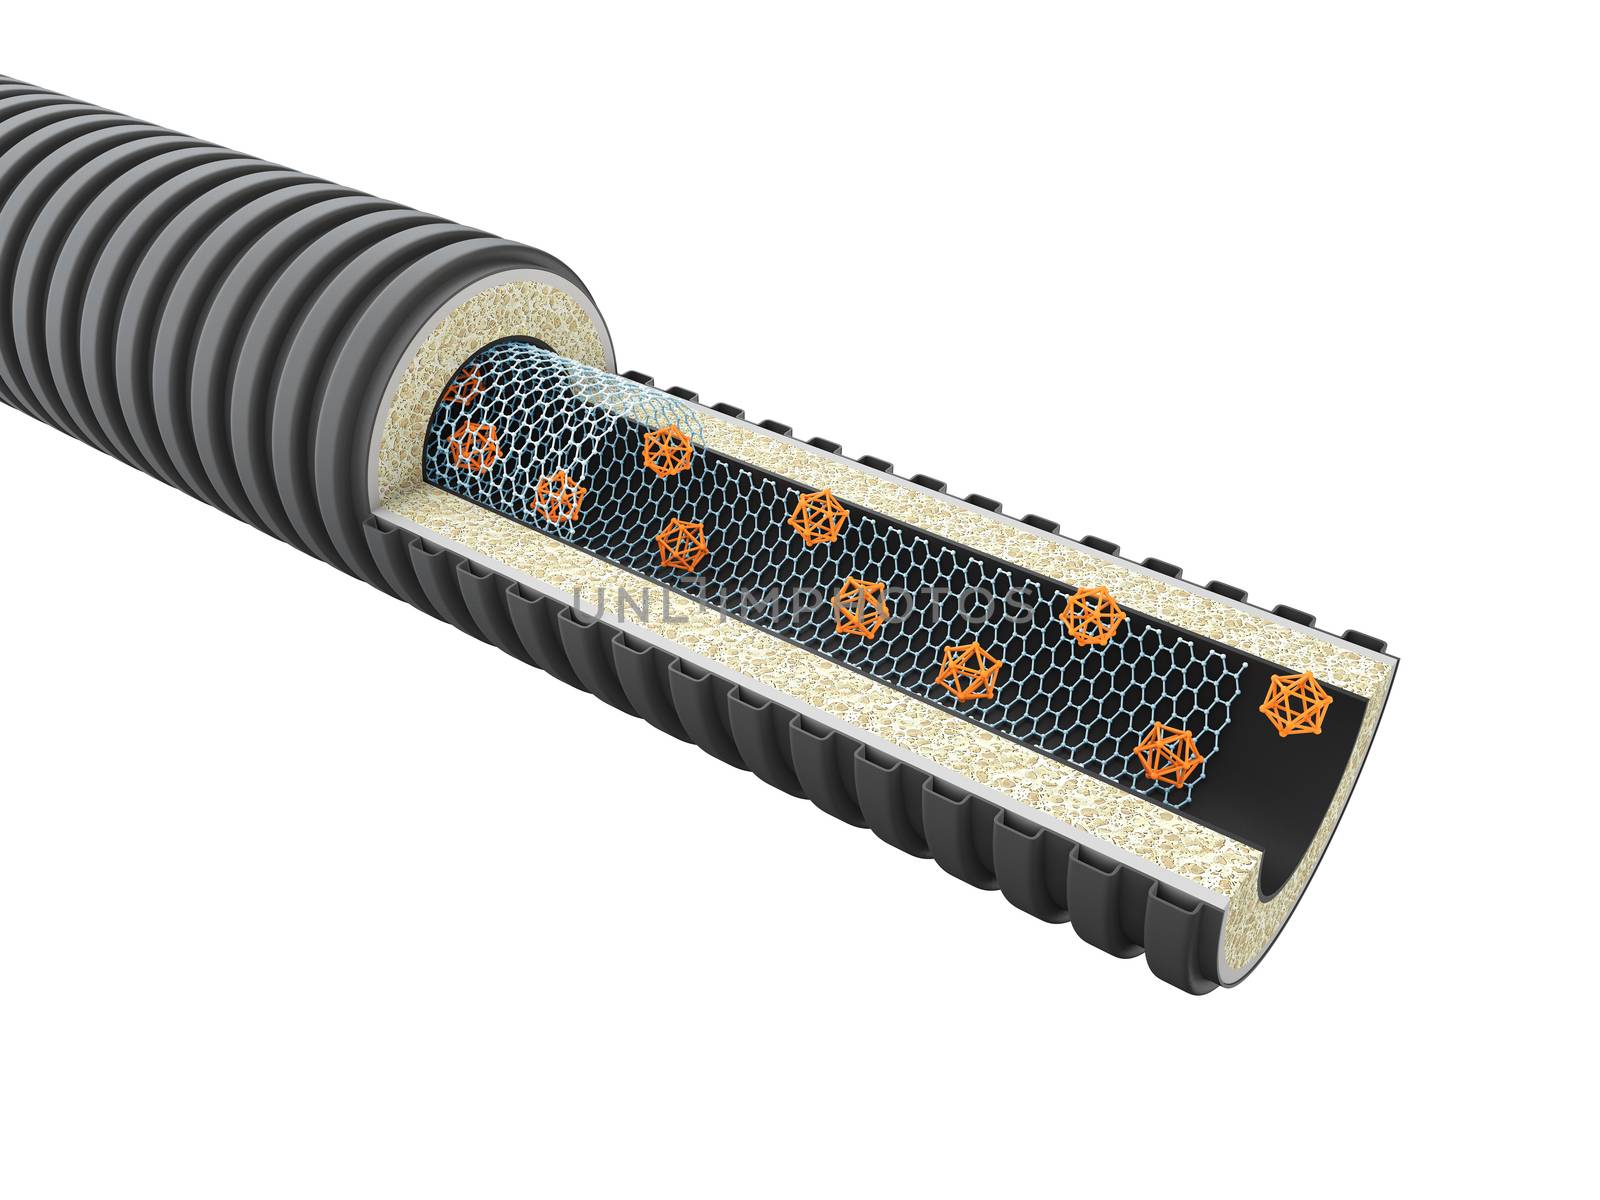 3d Illustration of Carbon nanotube structure inside view illustration.